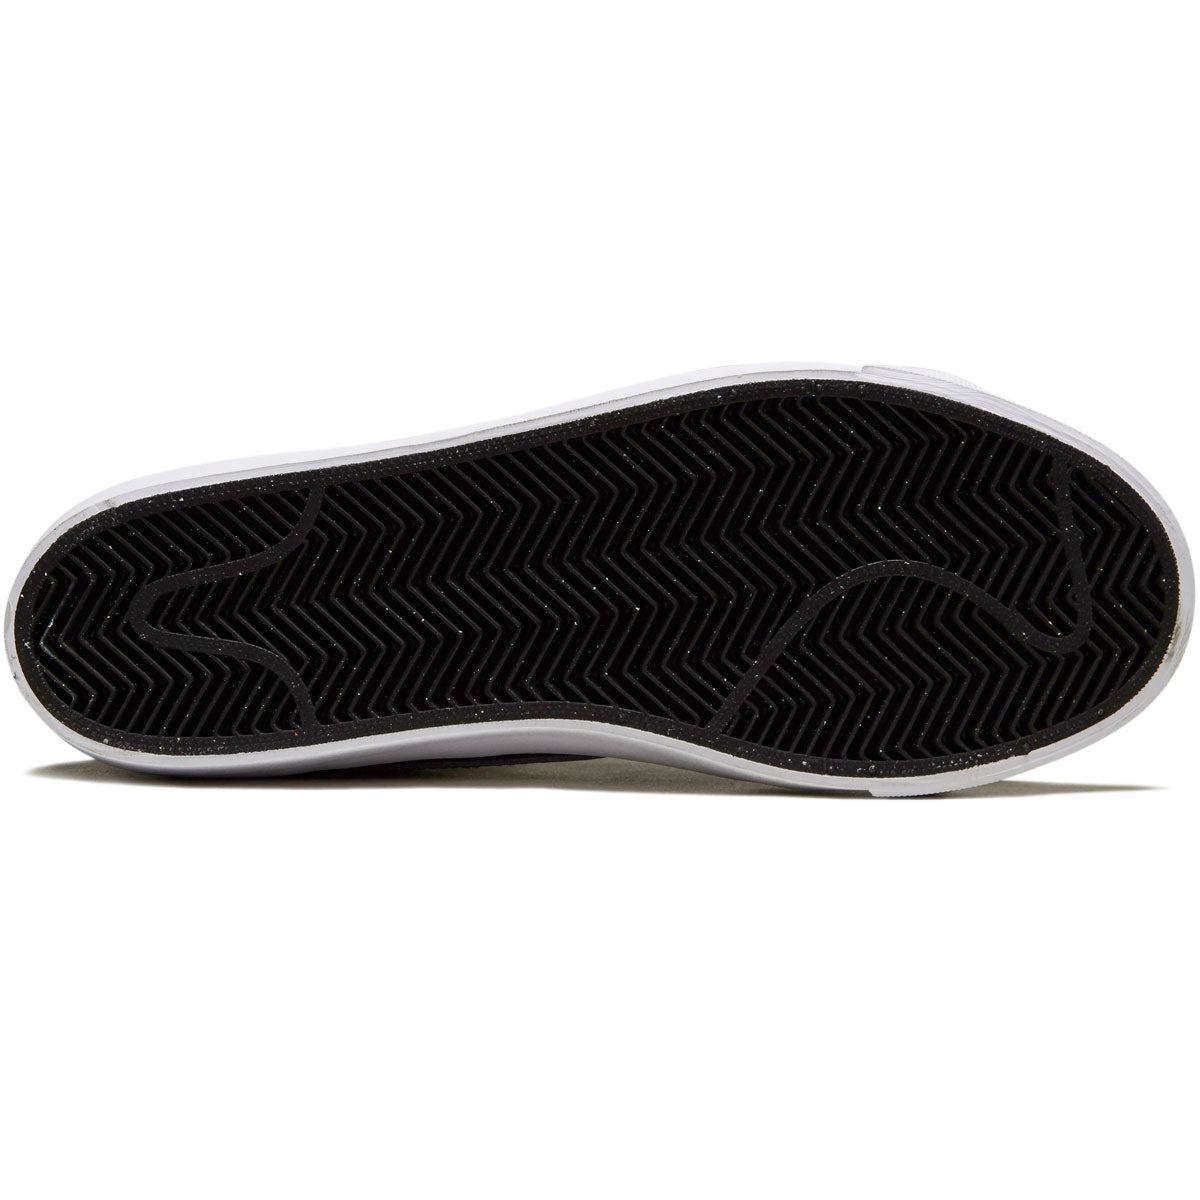 Nike SB Zoom Blazer Mid Pro GT Shoes - Black/Metallic Silver/University Red image 4